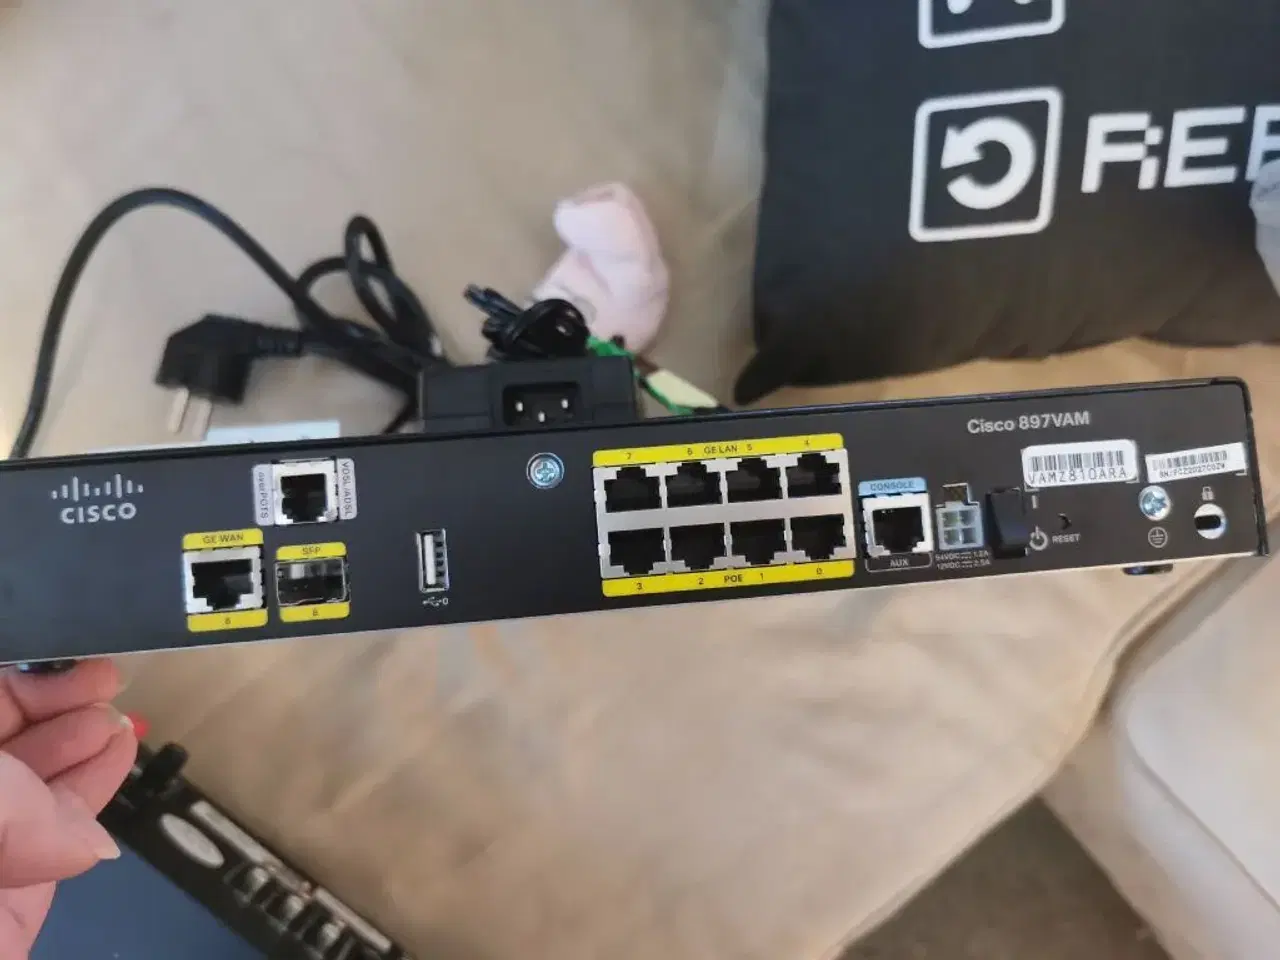 Billede 3 - Cisco 890 series router